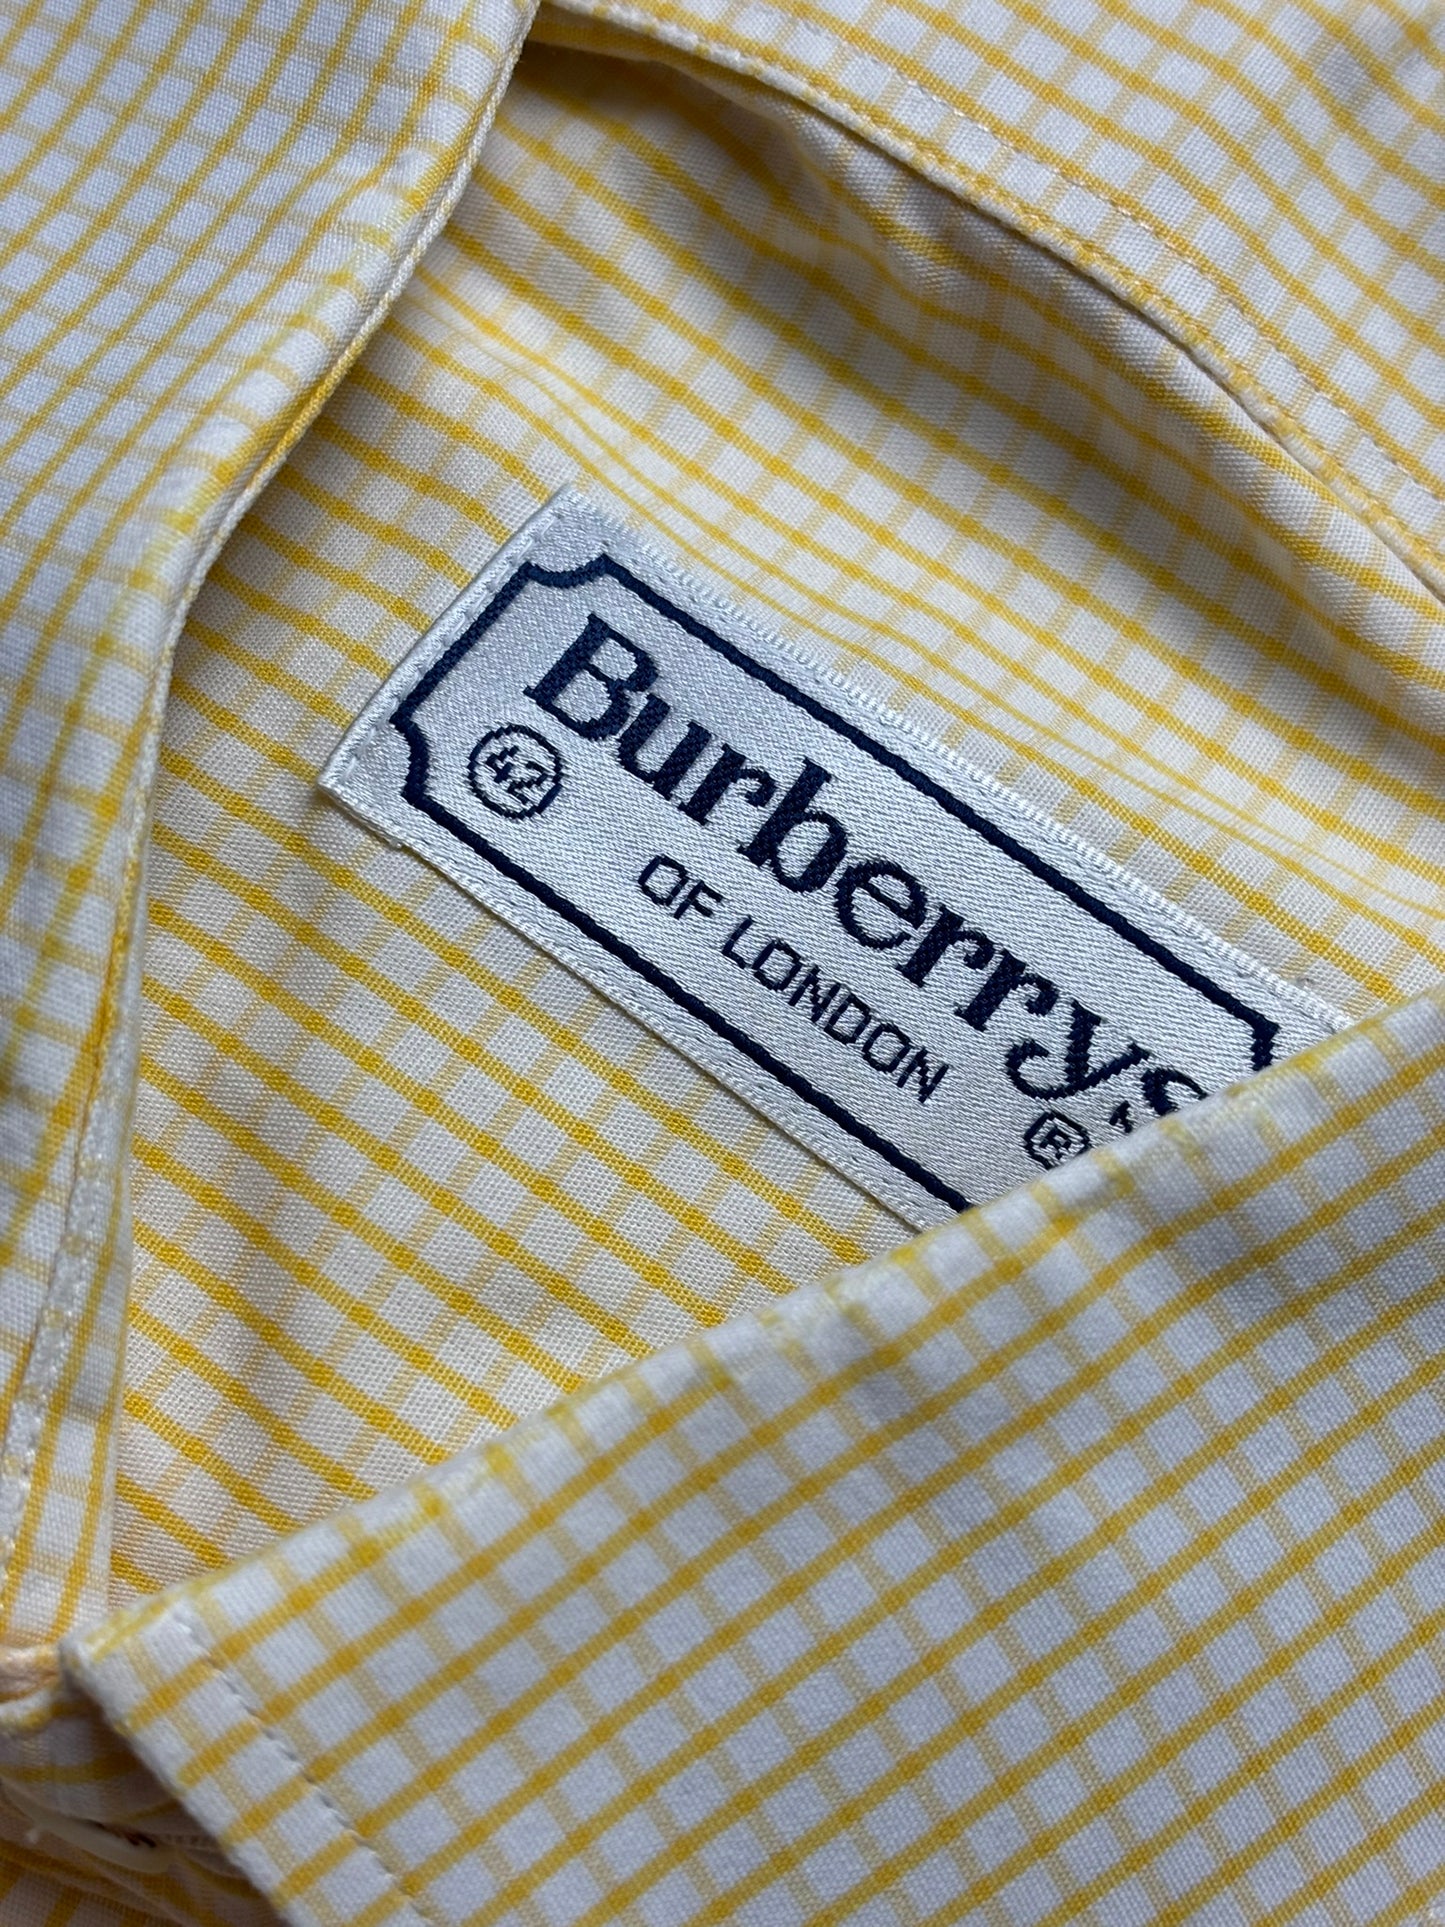 Camisa a cuadros Burberry vintage - XL